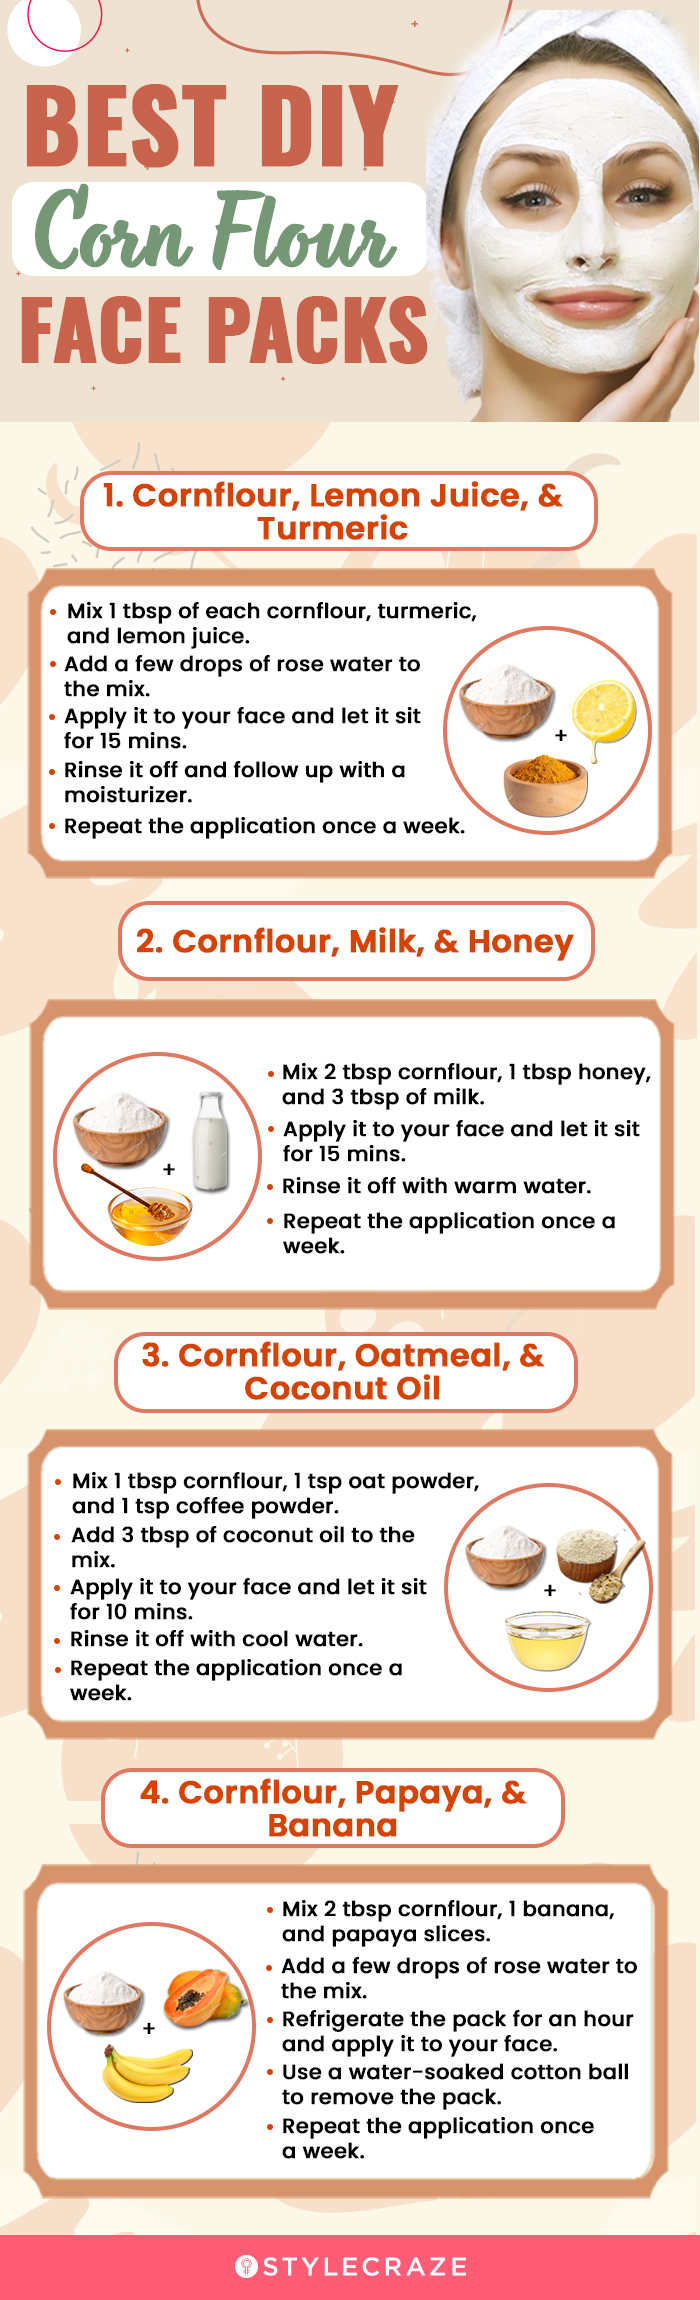 best diy corn flour face packs (infographic)